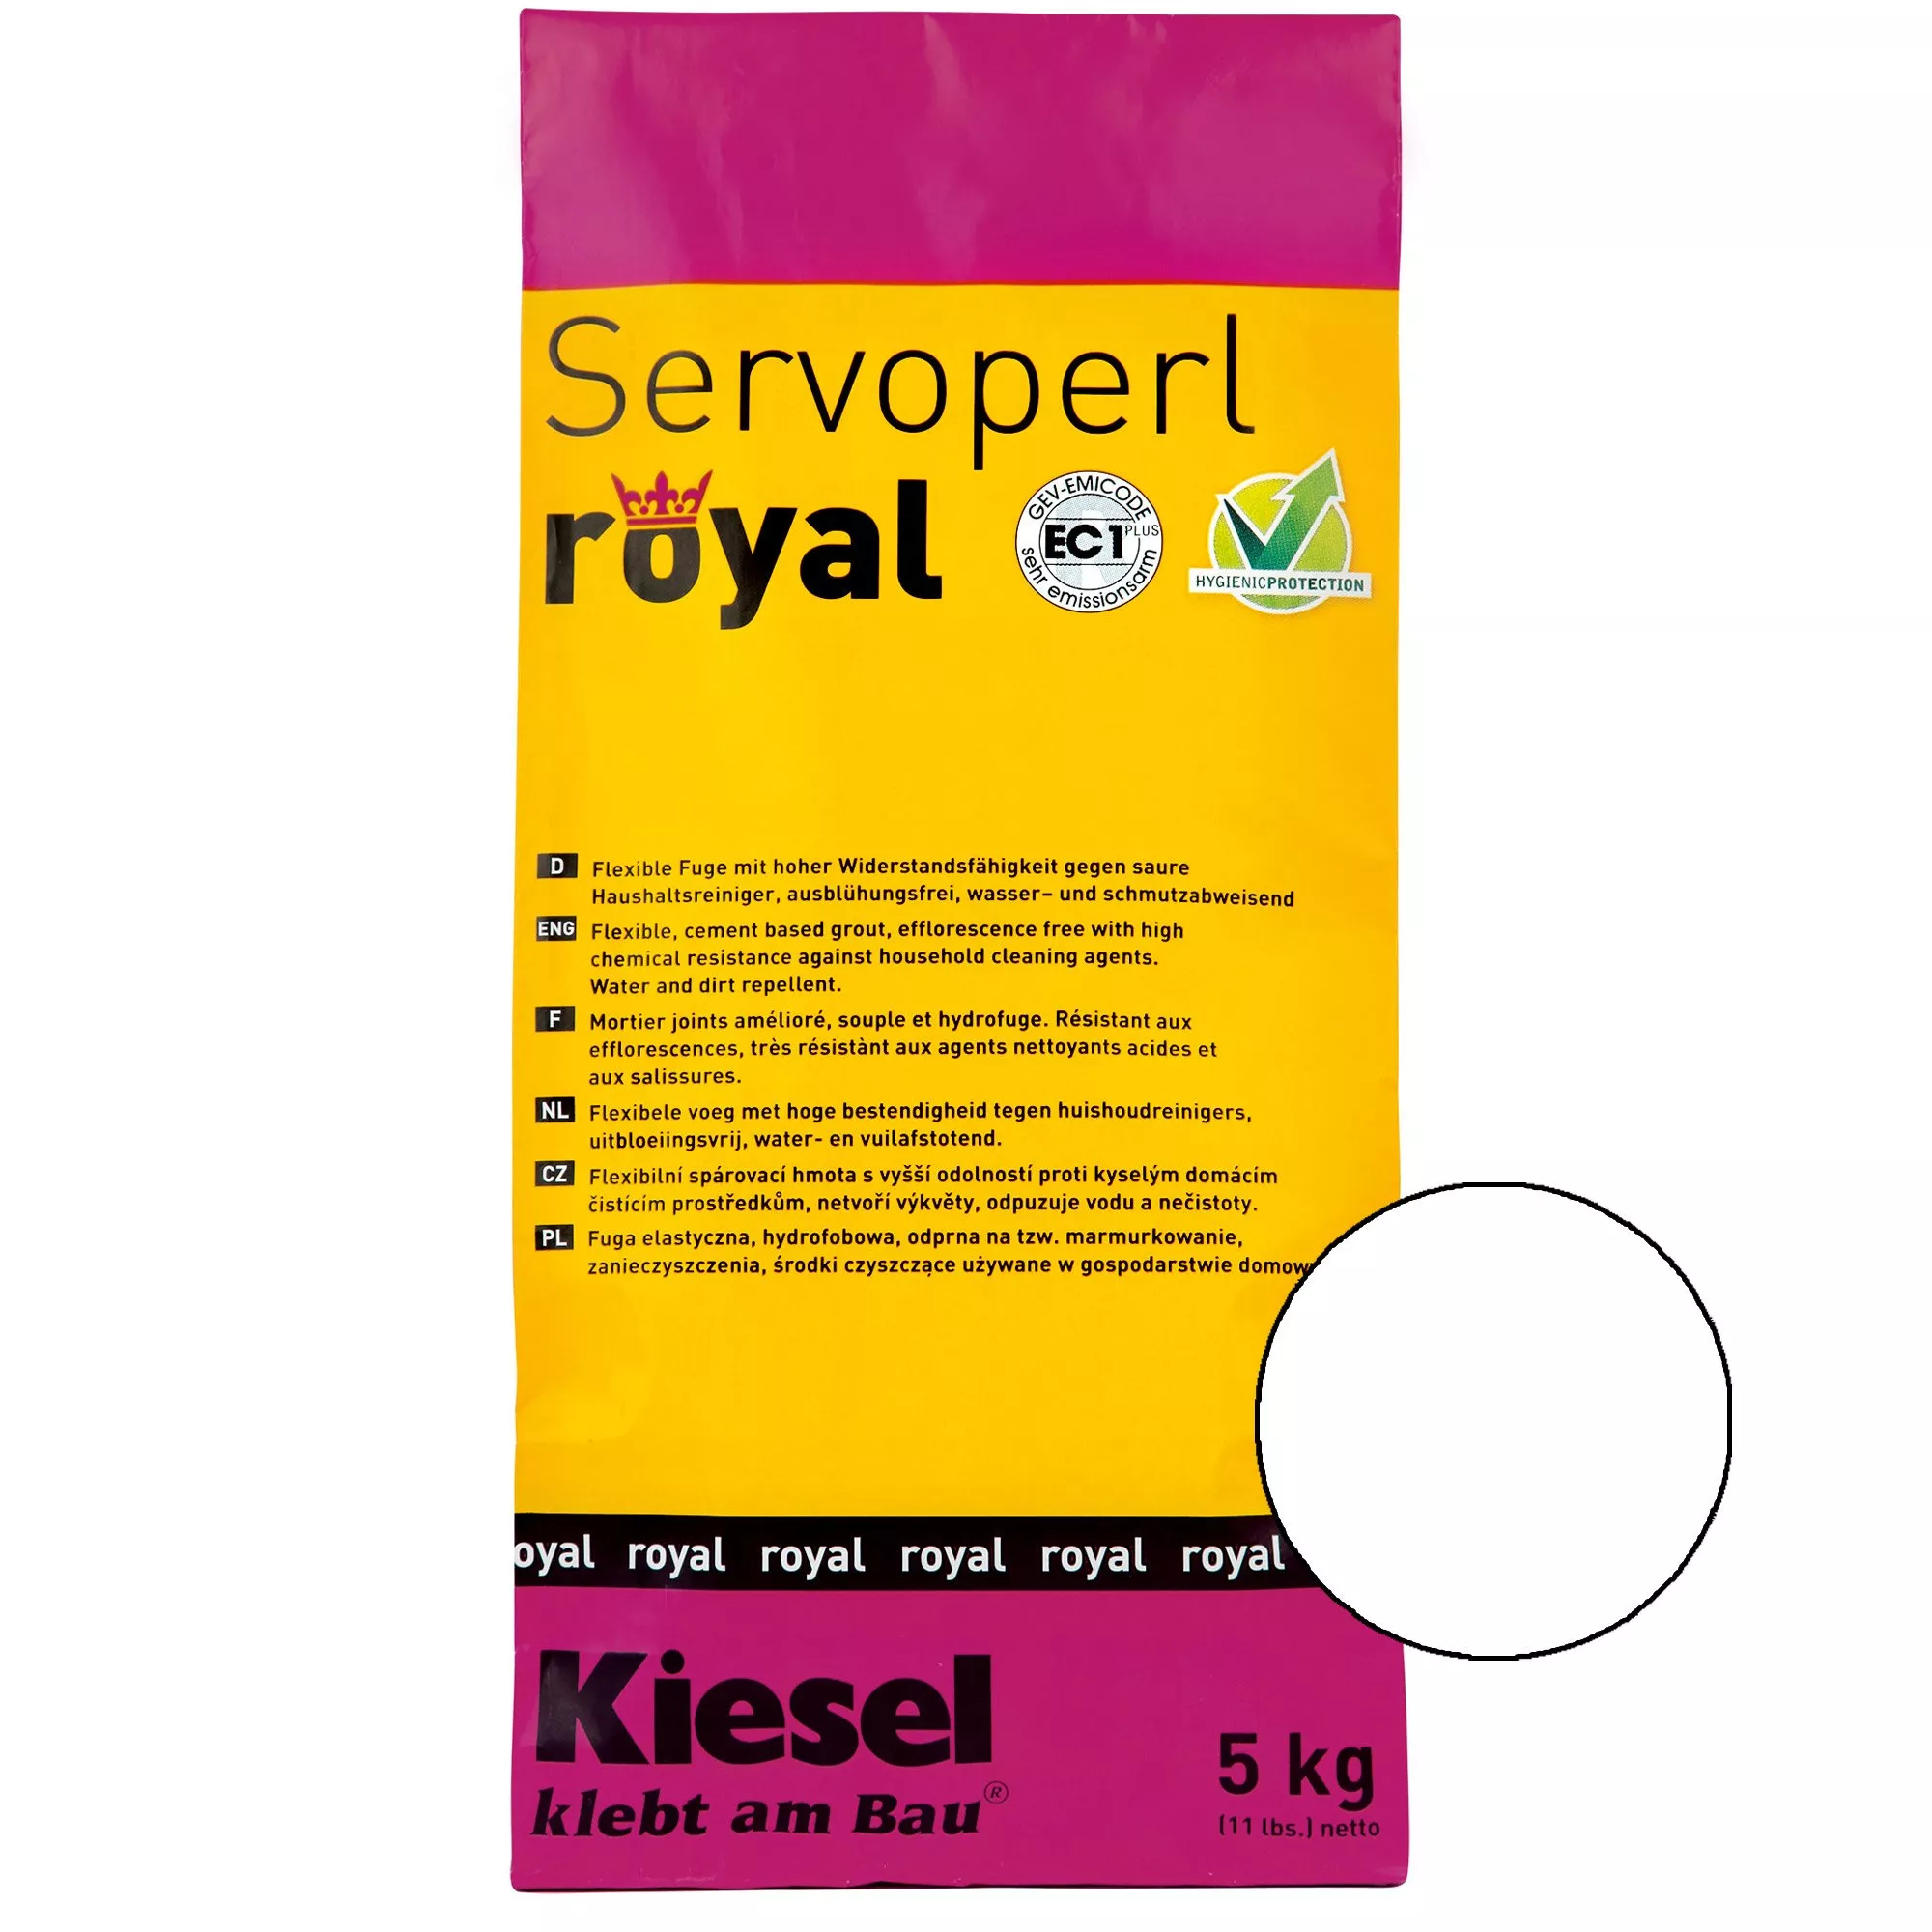 Kiesel Servoperl Royal - Flexibele, Water- En Vuilafstotende Voeg (5KG Wit)